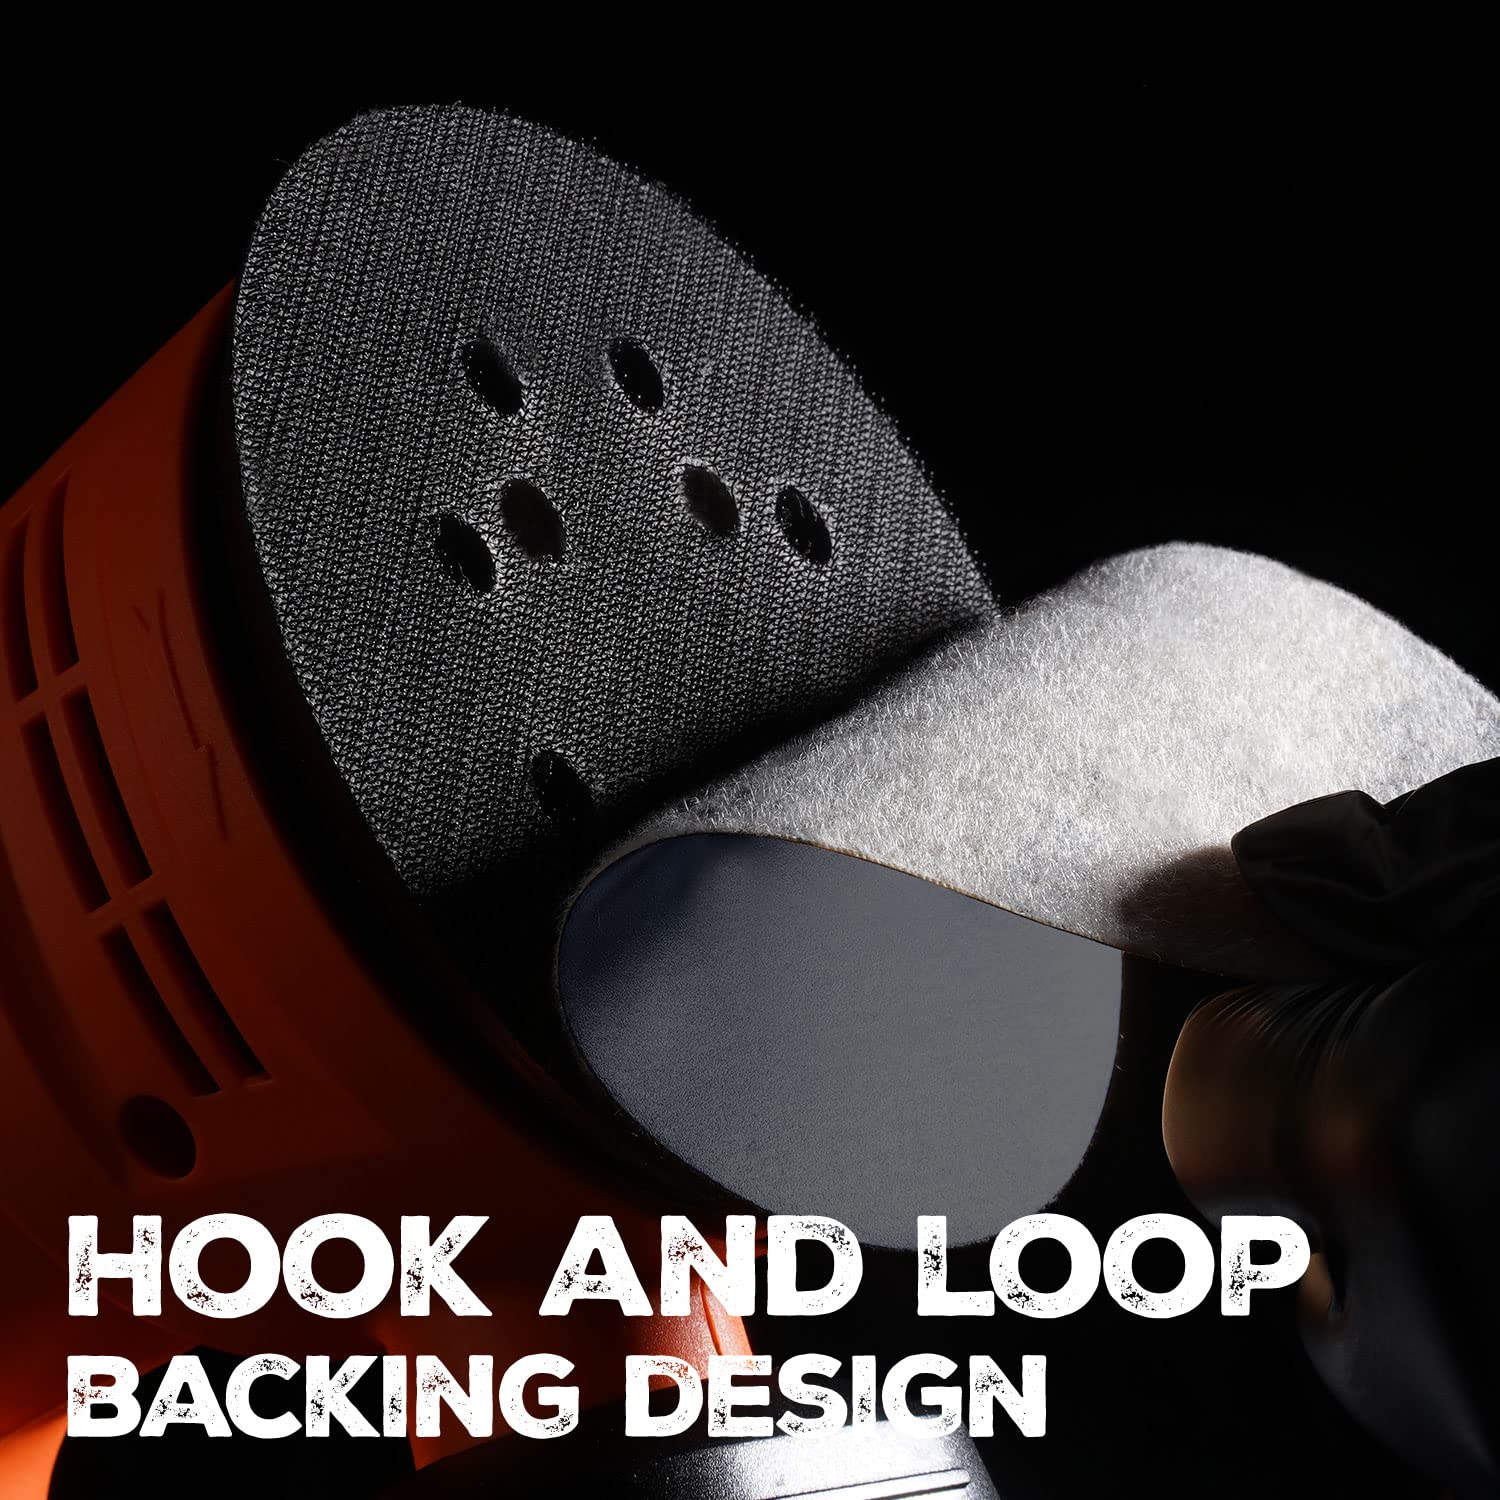 6 inch Hook and Loop Sanding Discs, 1000-5000 Grit, Waterproof Silicon Carbide